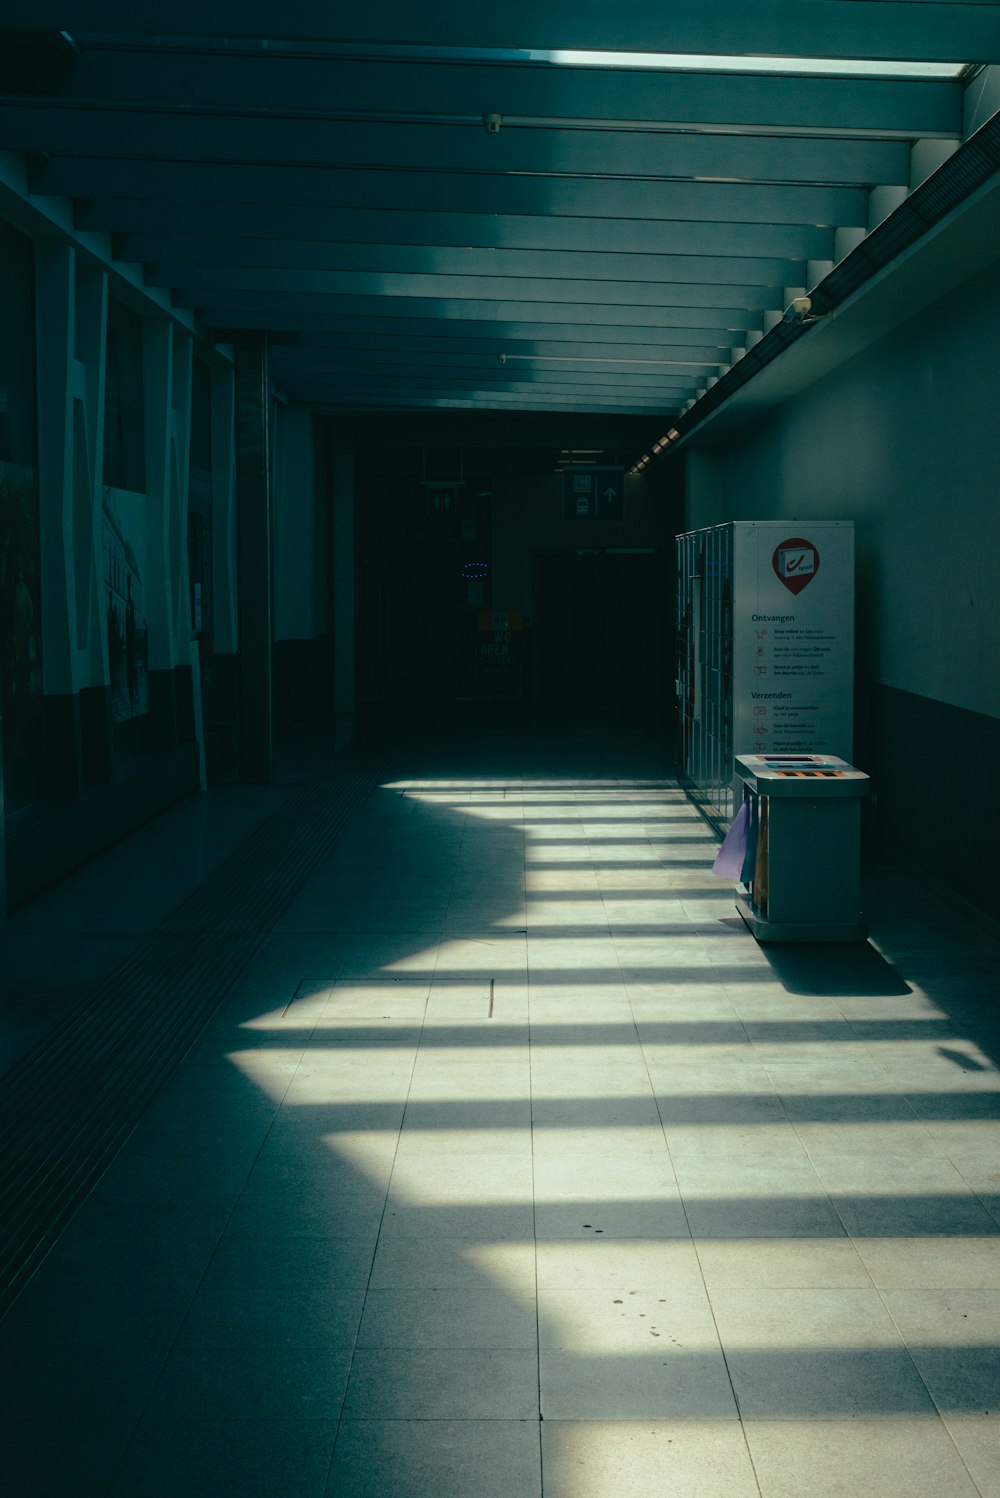 a long hallway with long shadows on the floor